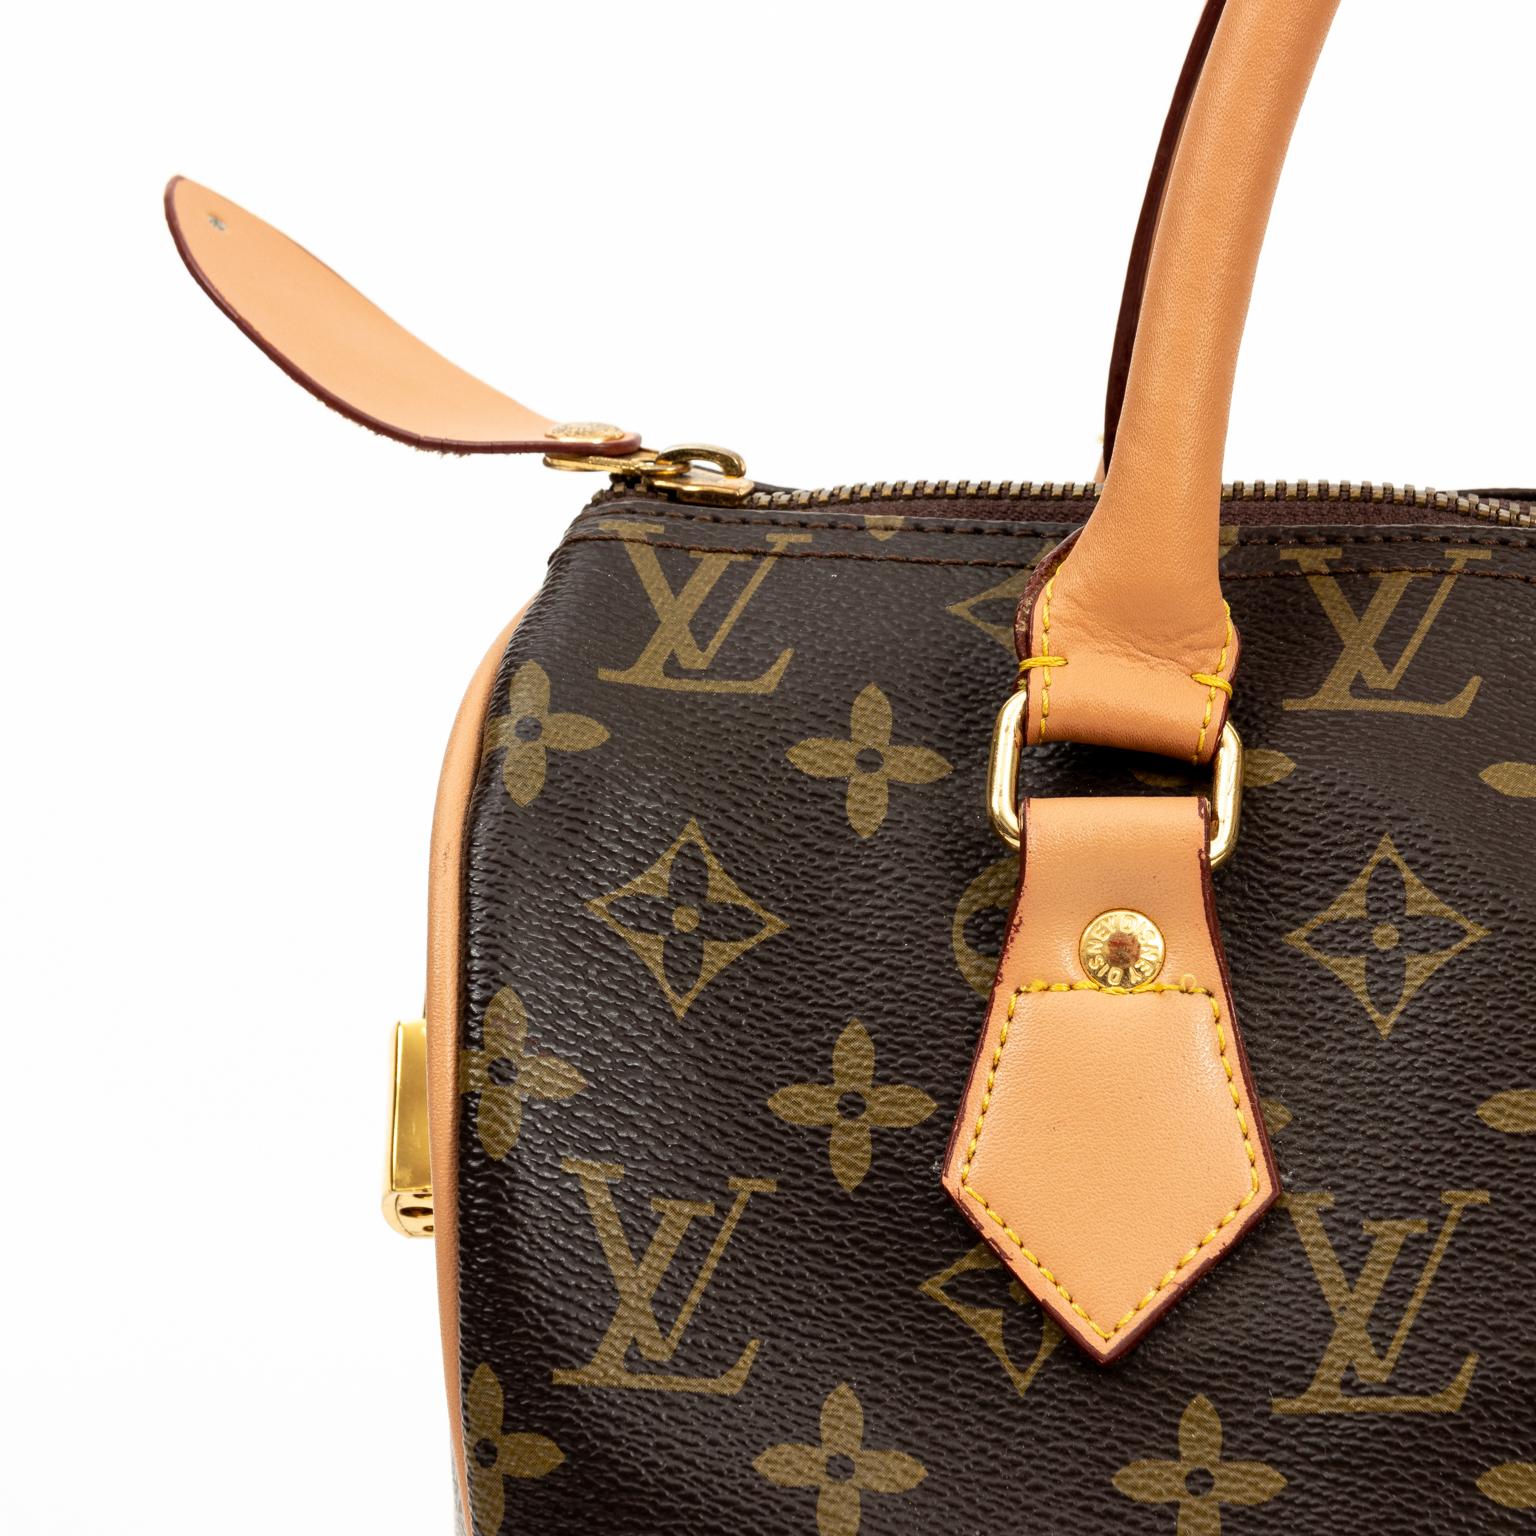 American Authentic Louis Vuitton Handbag